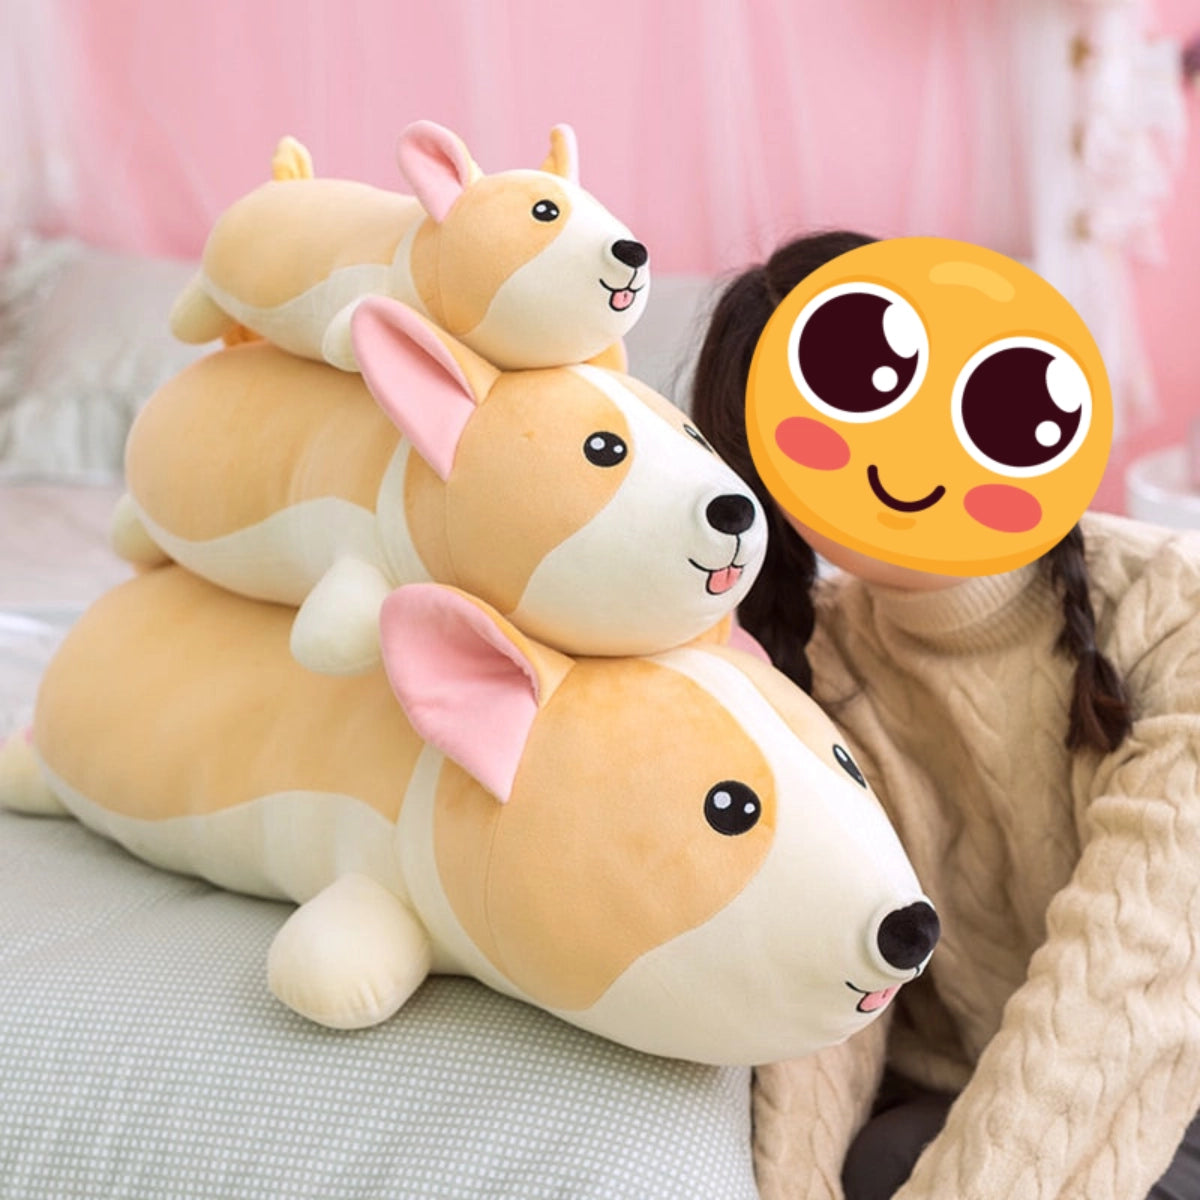 Kawaii Plush Toy Dog Corgis, Corgi Dog Plush Stuffed Toy